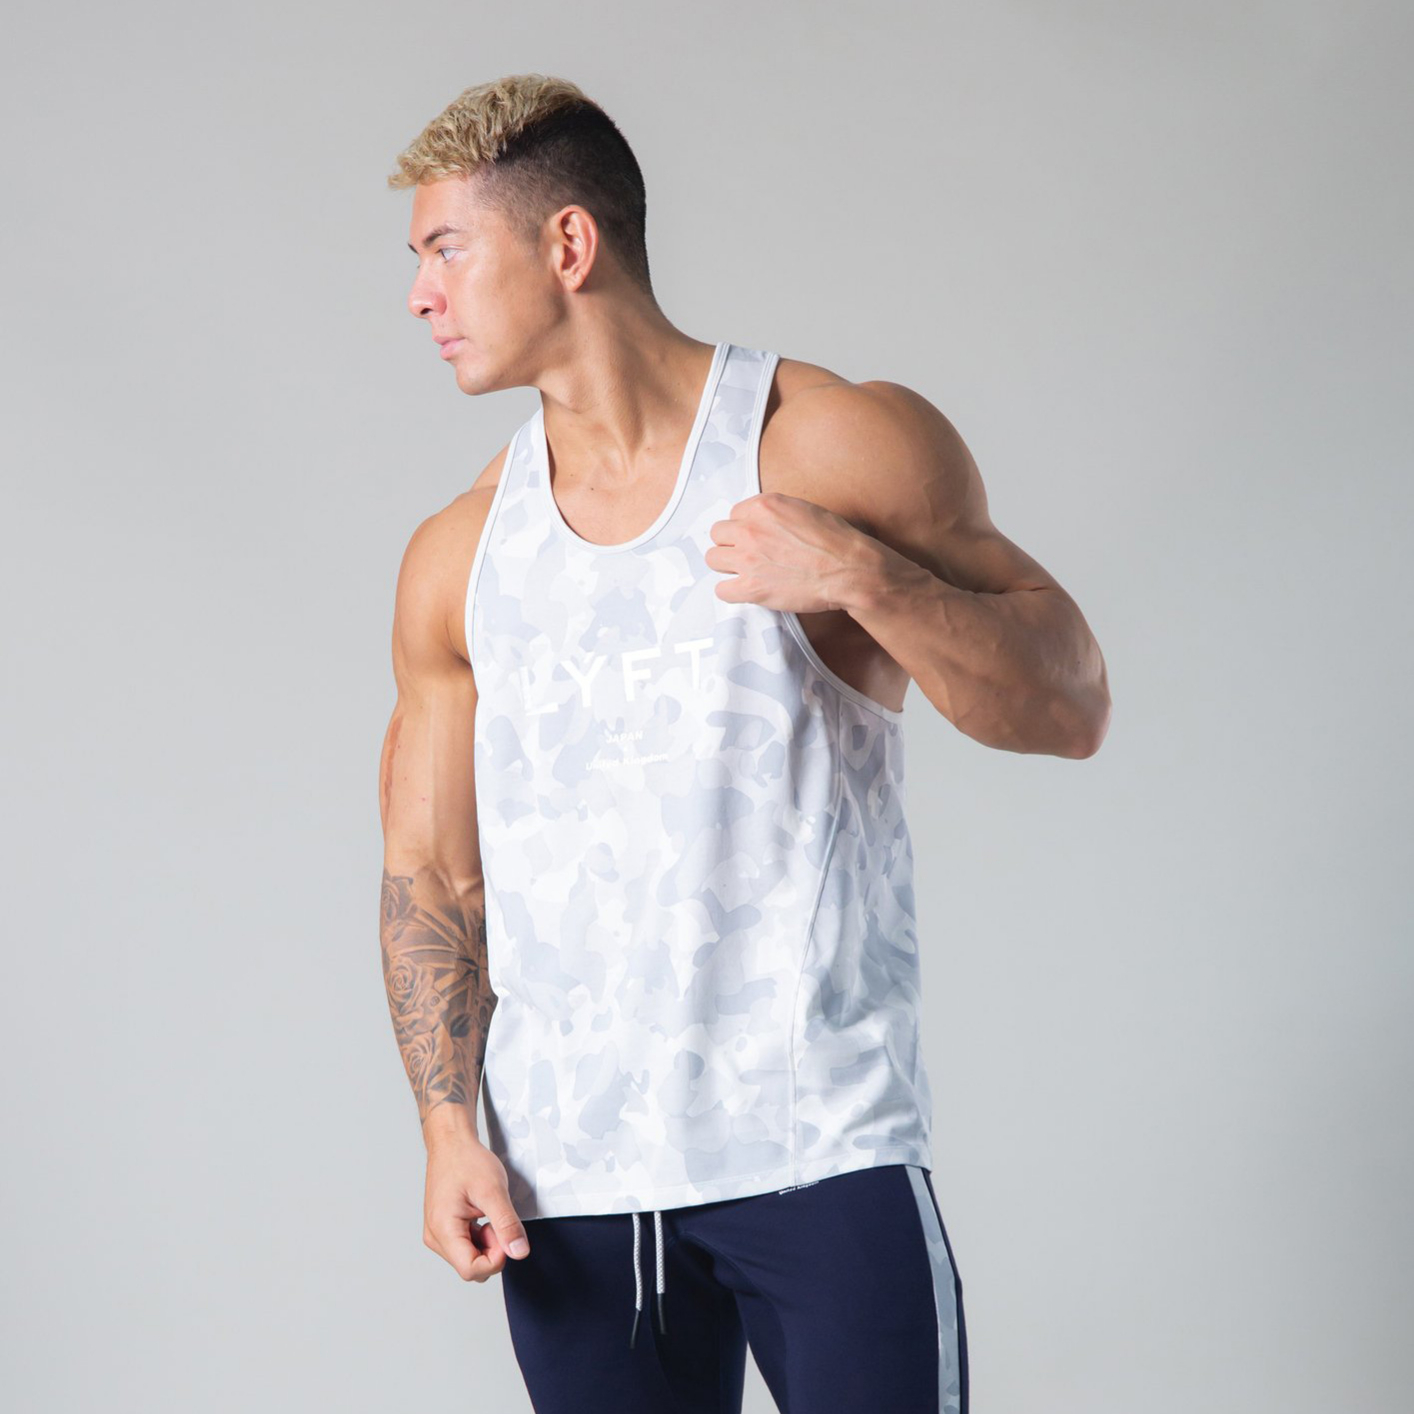 LYFT-BX08 Comfortable Sleeveless Basic Casual Camisole Plain Tank Top Shirt Fitness men's gym Tank Tops